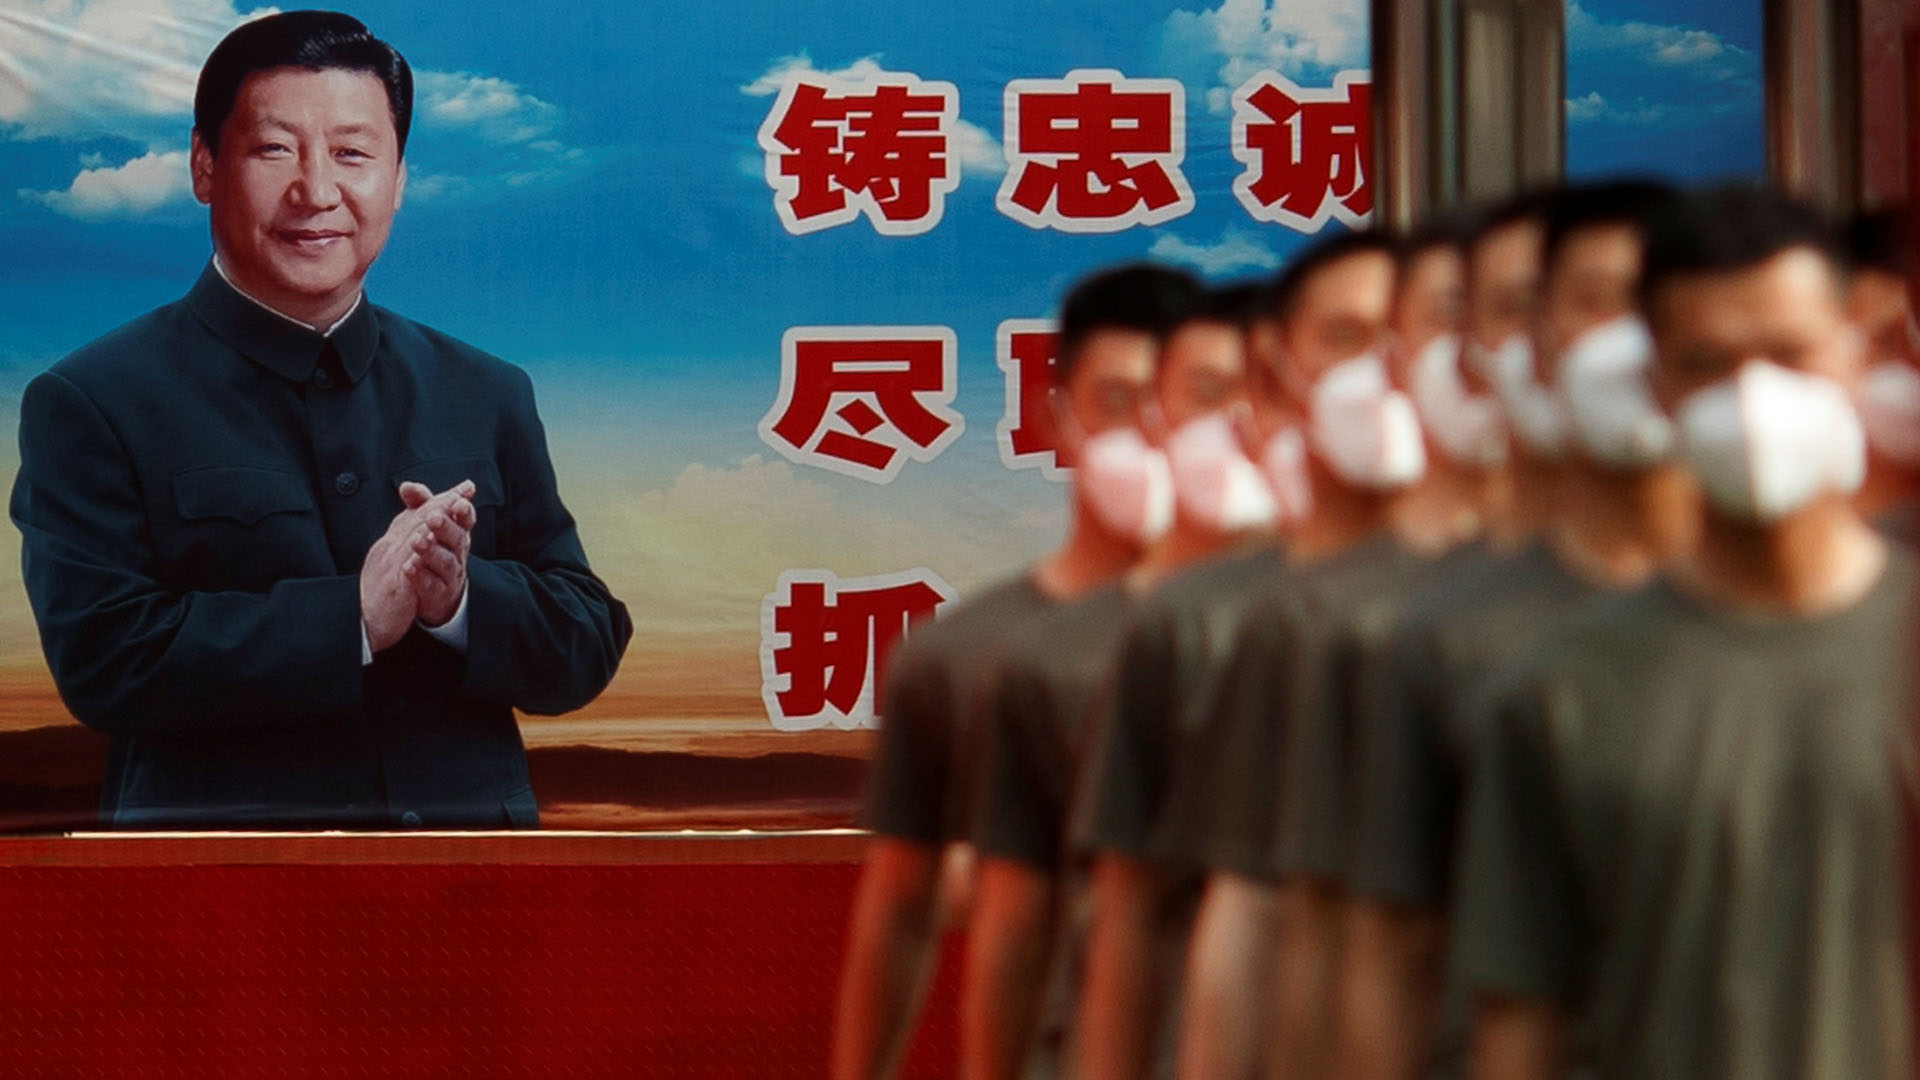 Fuerzas paramilitares chinas formadas frente a un retrato del presidente Xi Jinping (REUTERS/Thomas Peter)